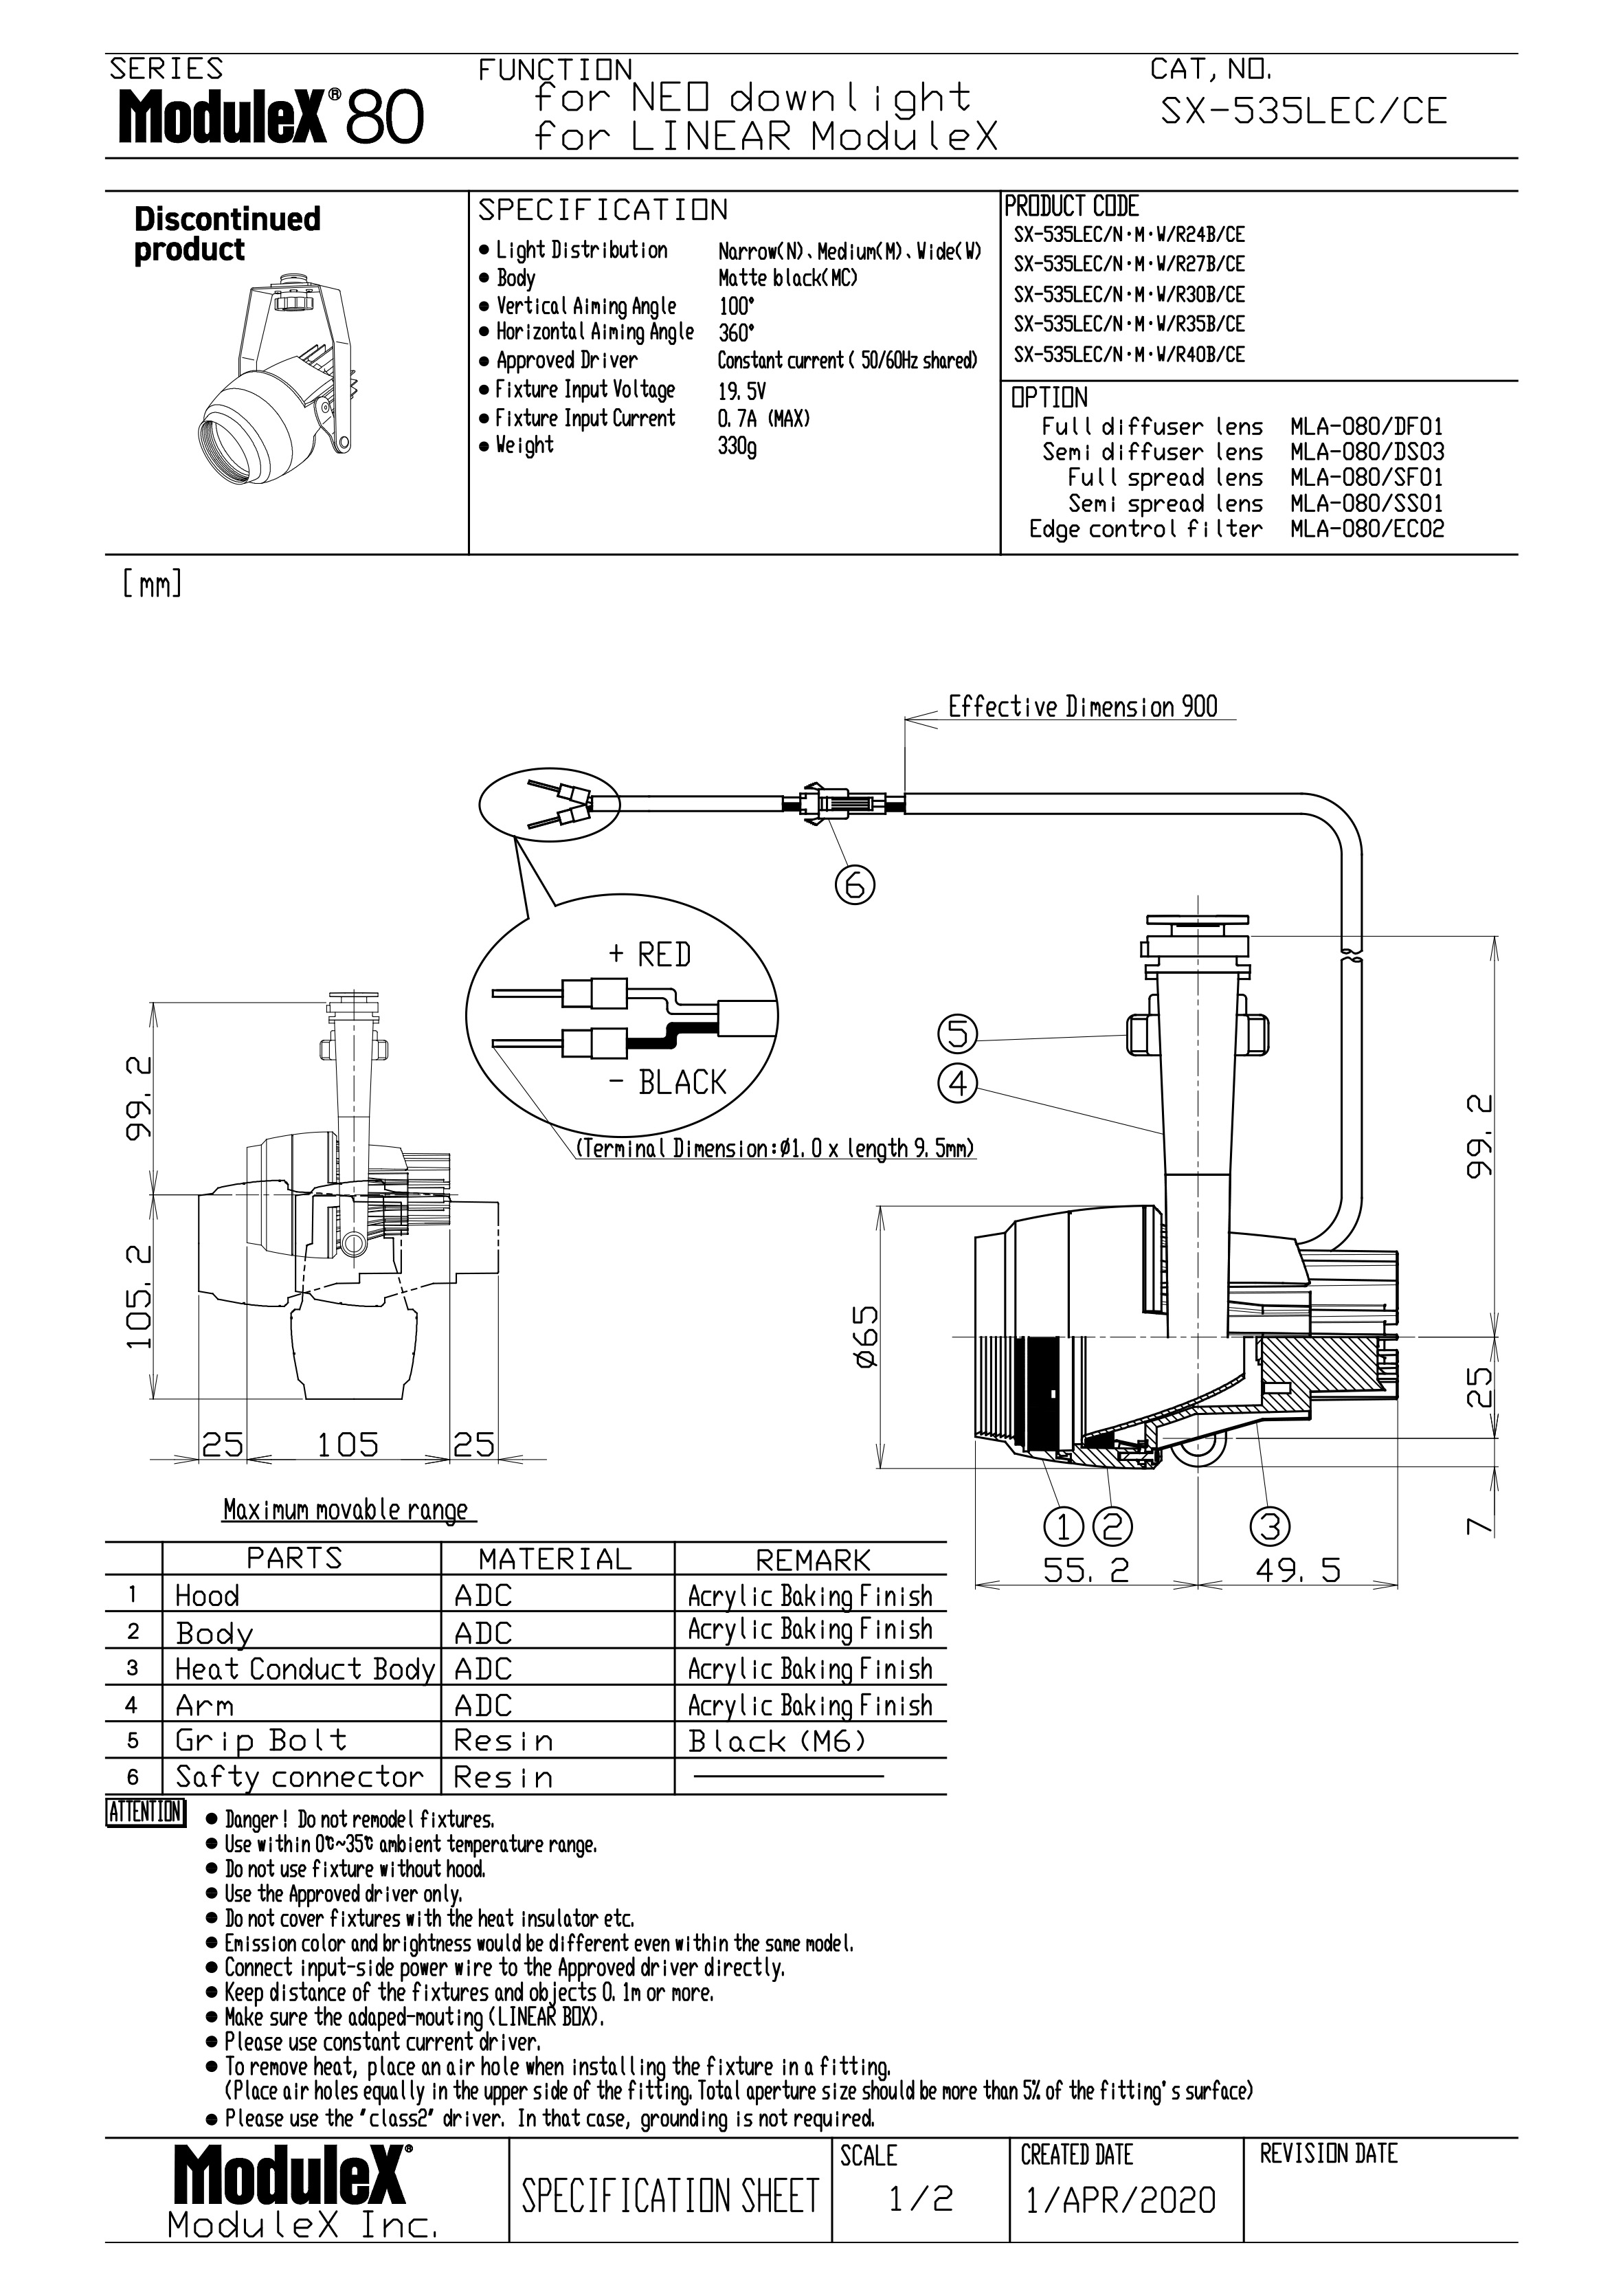 SX-535LEC Specification Sheet